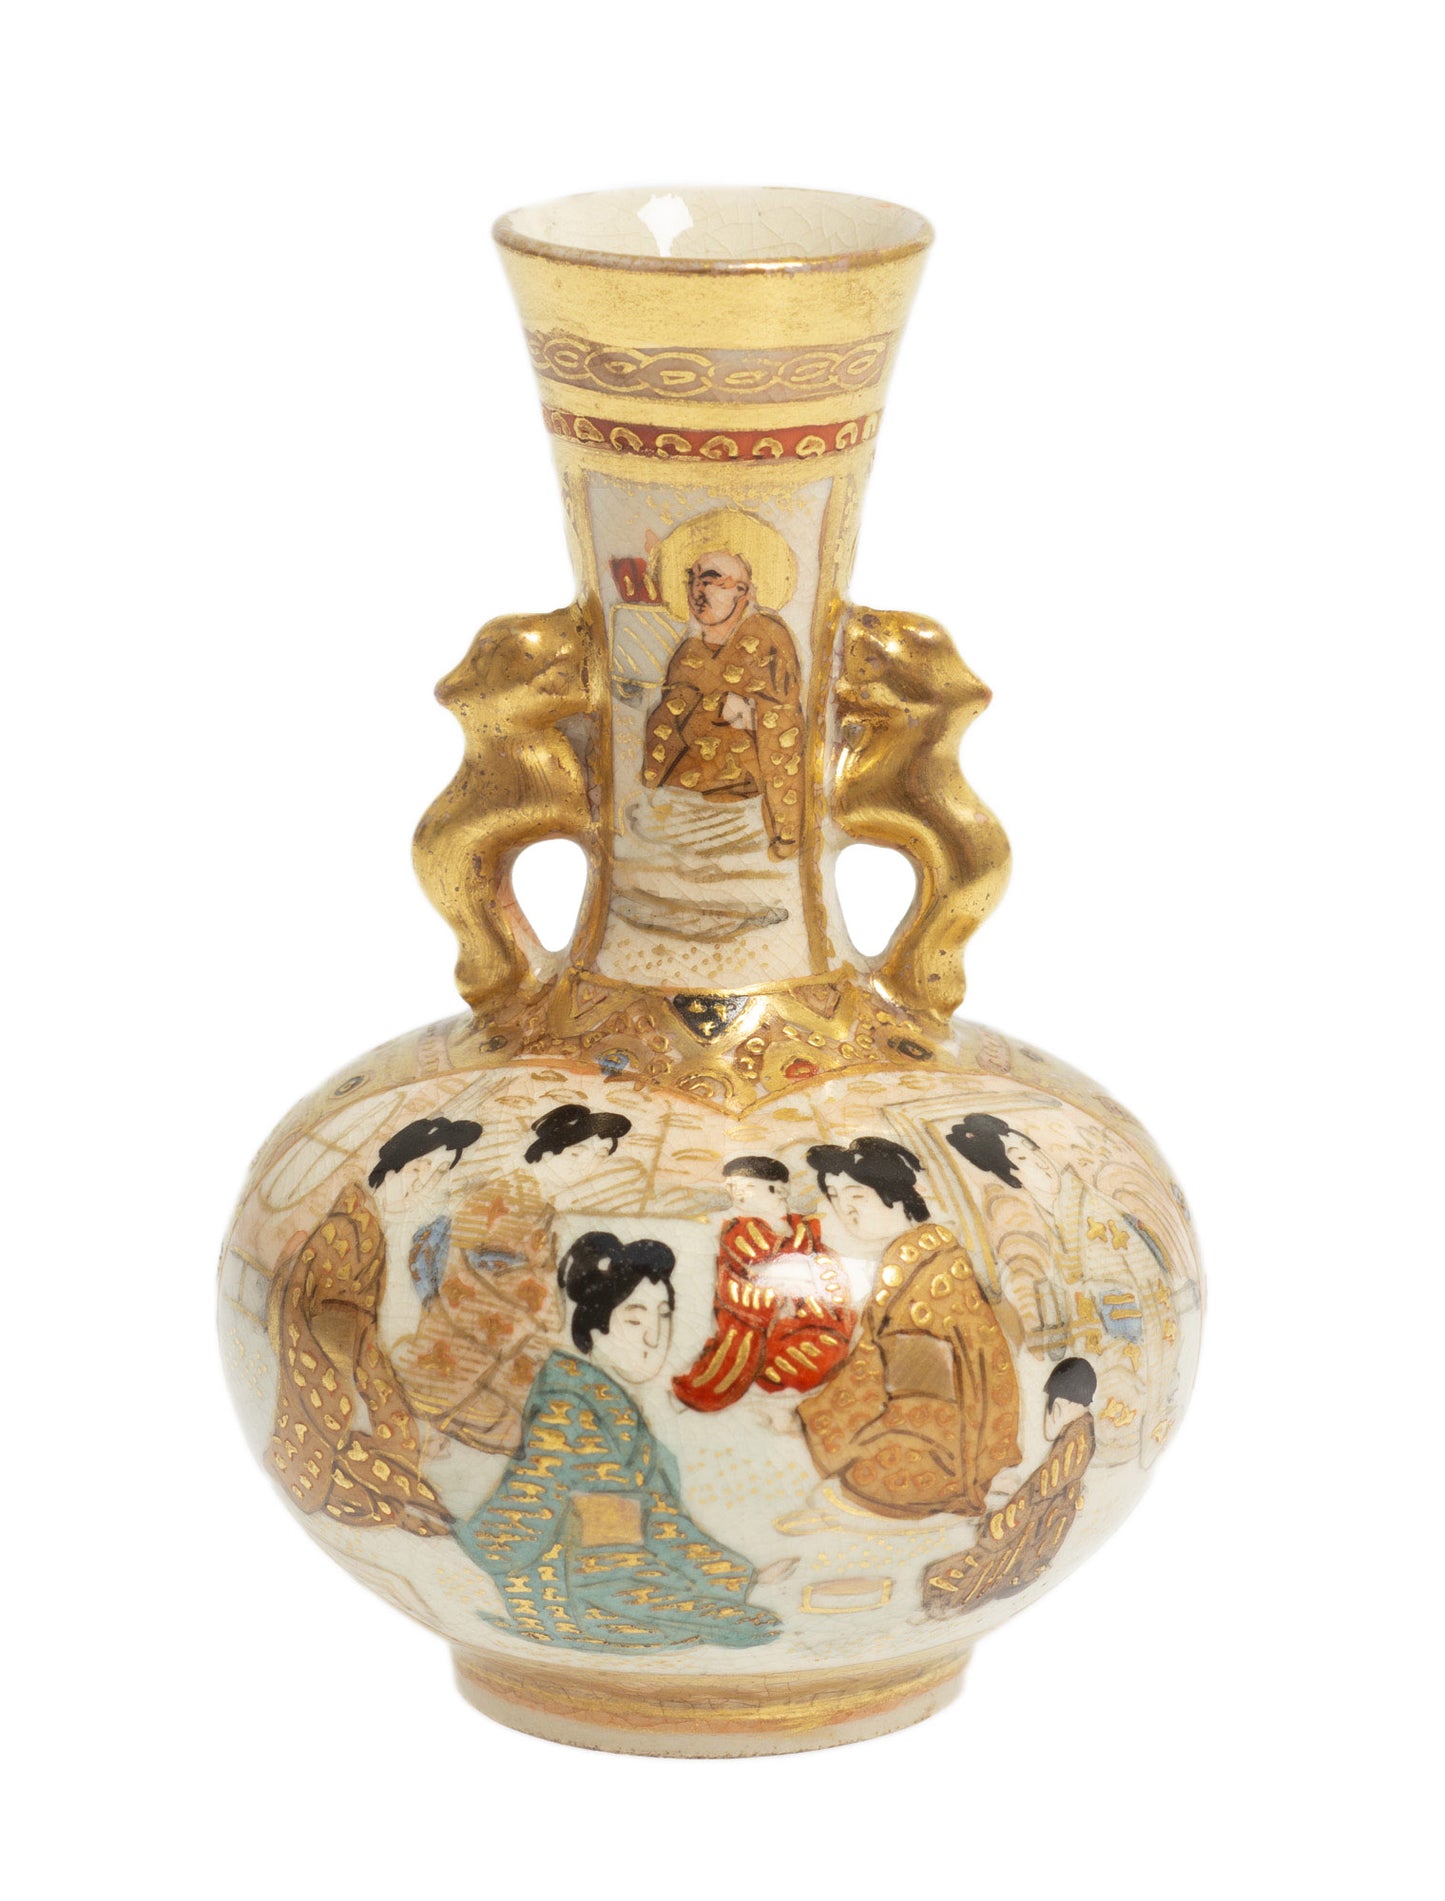 Antique Japanese Meiji Period Minitaure Satsuma Vase with Rakan & Handles c1900 (Code 2725)